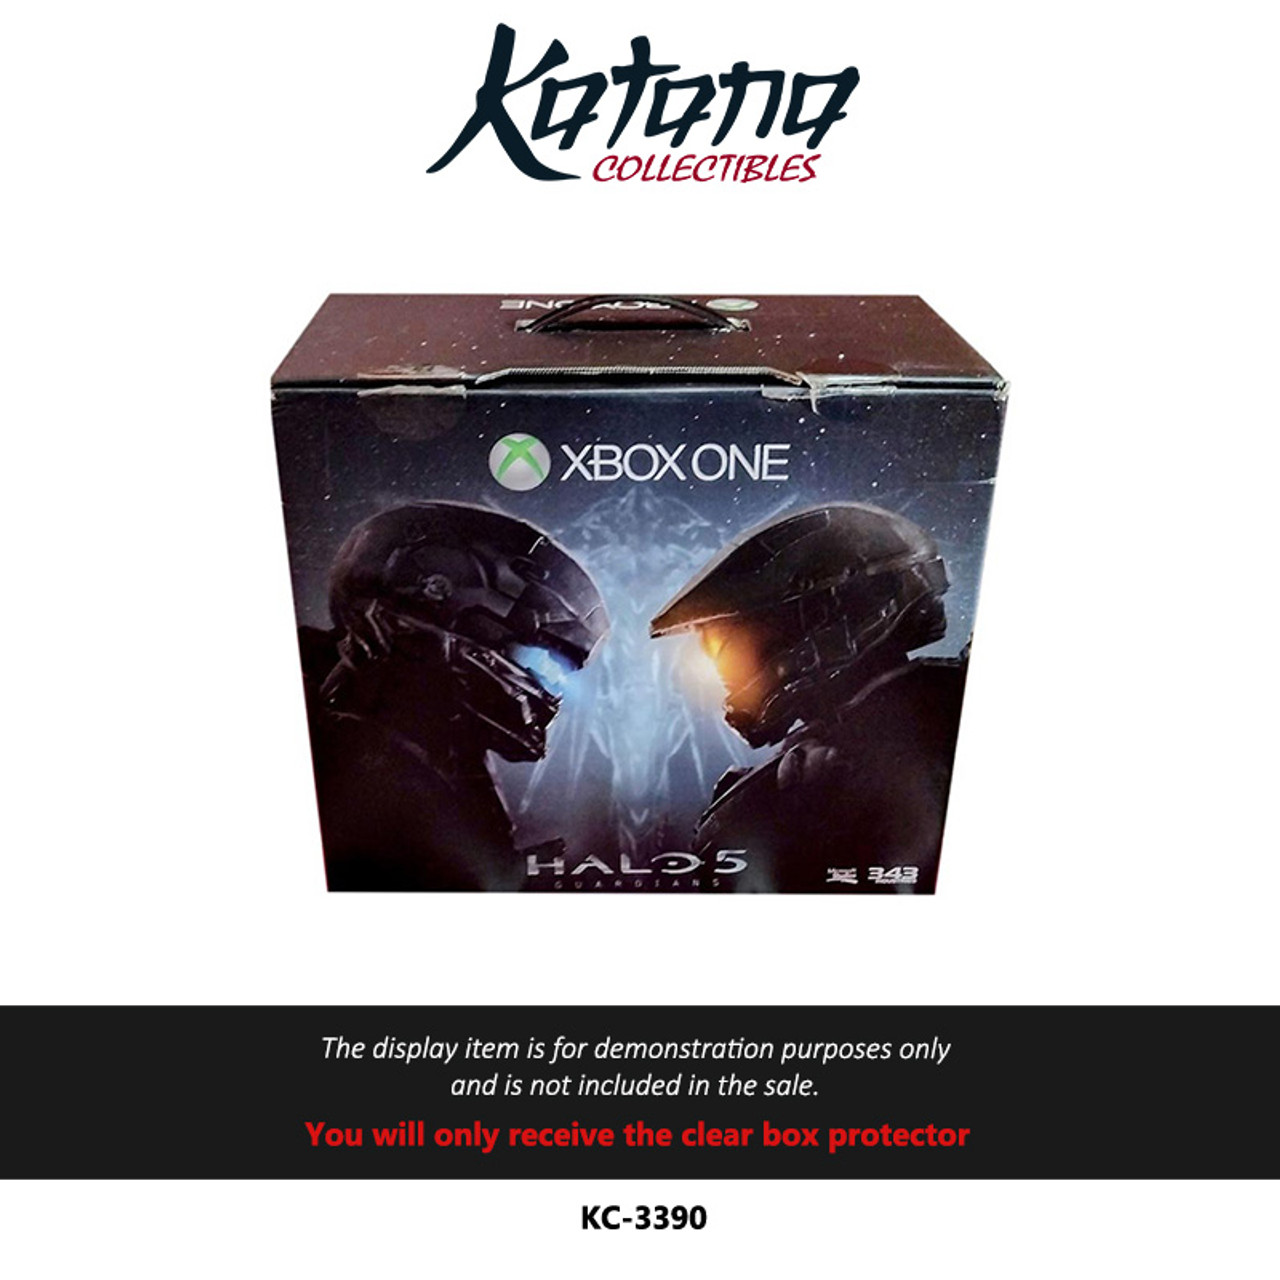 Katana Collectibles Protector For Xbox One Console Halo 5 Bundle